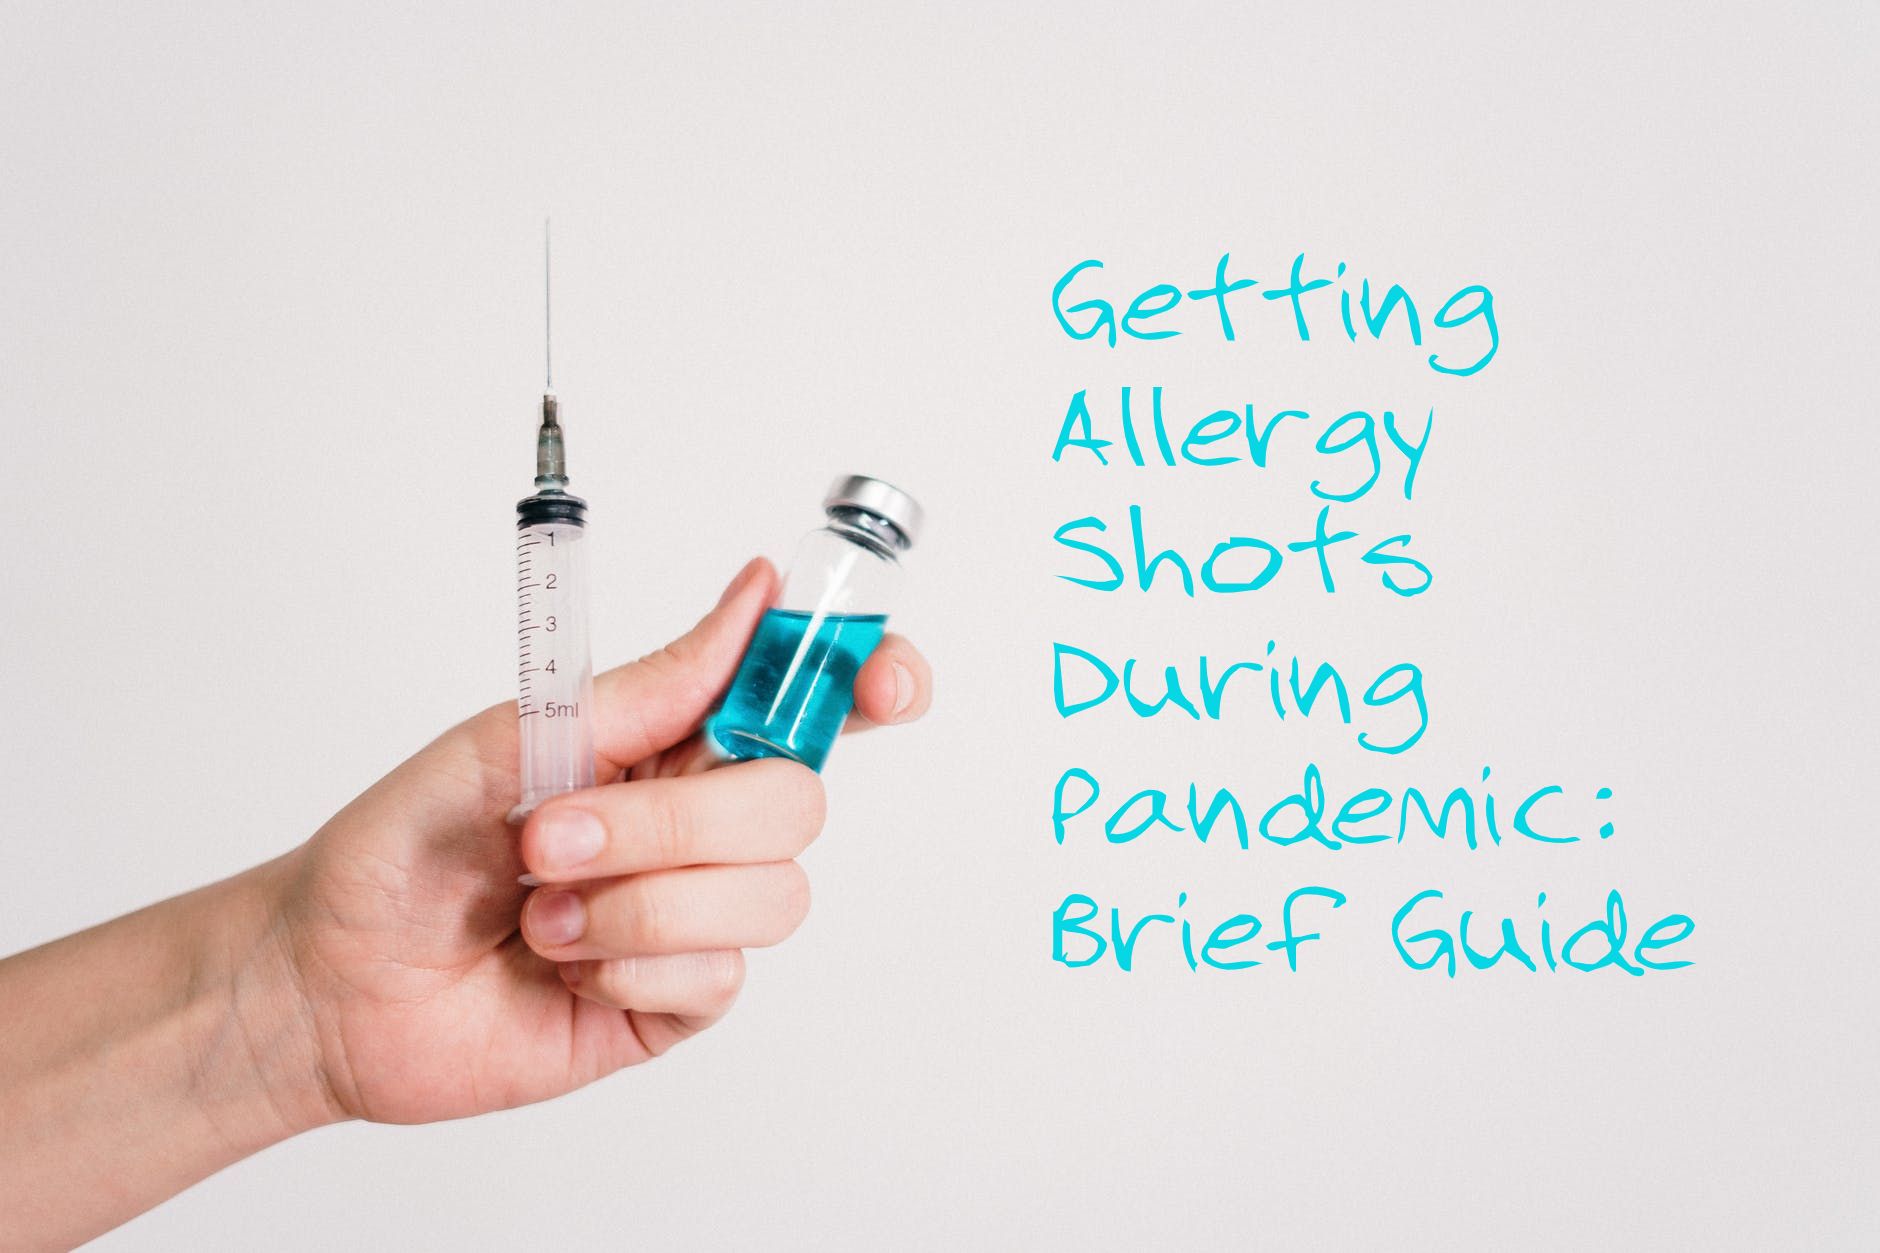 Allergy shots